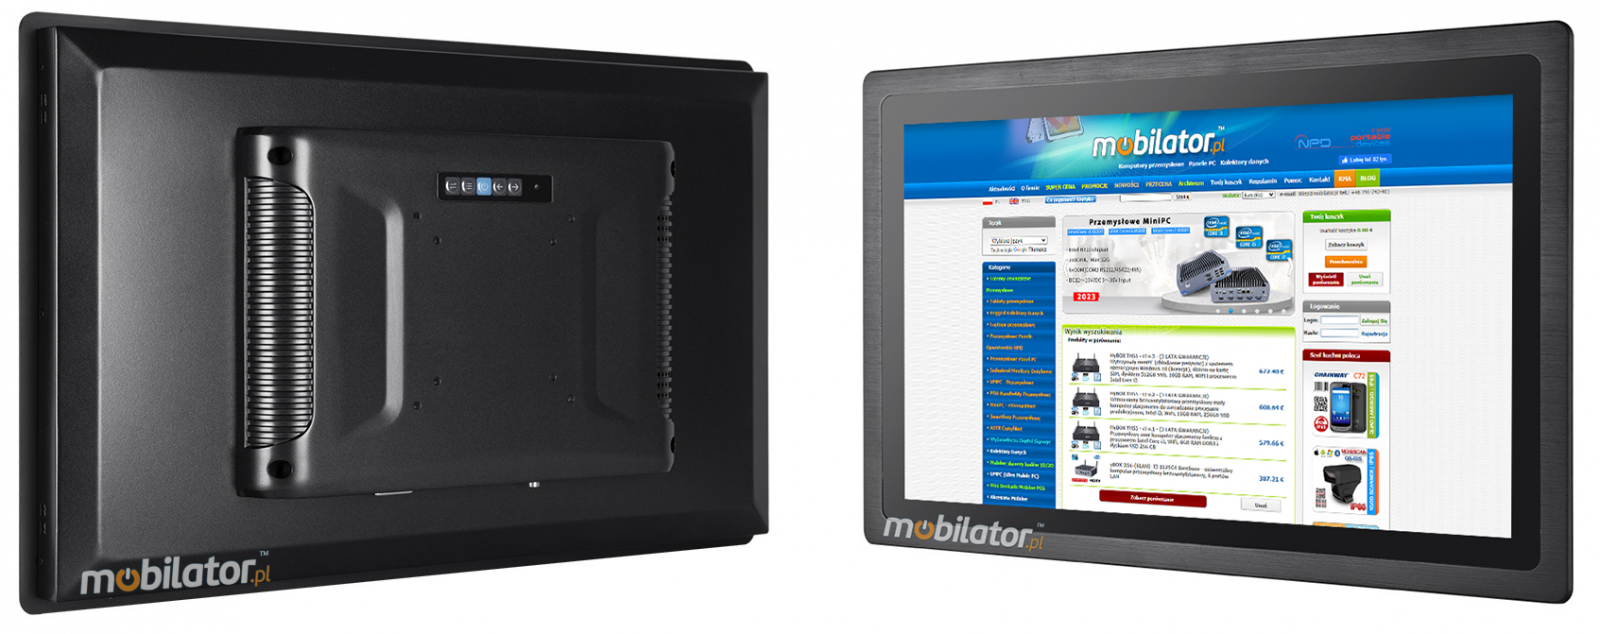 Monitor dotykowy MoTouch 185 Monitor dotykowy Ekran rezystywny resistive wywietlacz 18,5 cala TFT LCD mobilator.pl New Portable Devices VGA HDMI